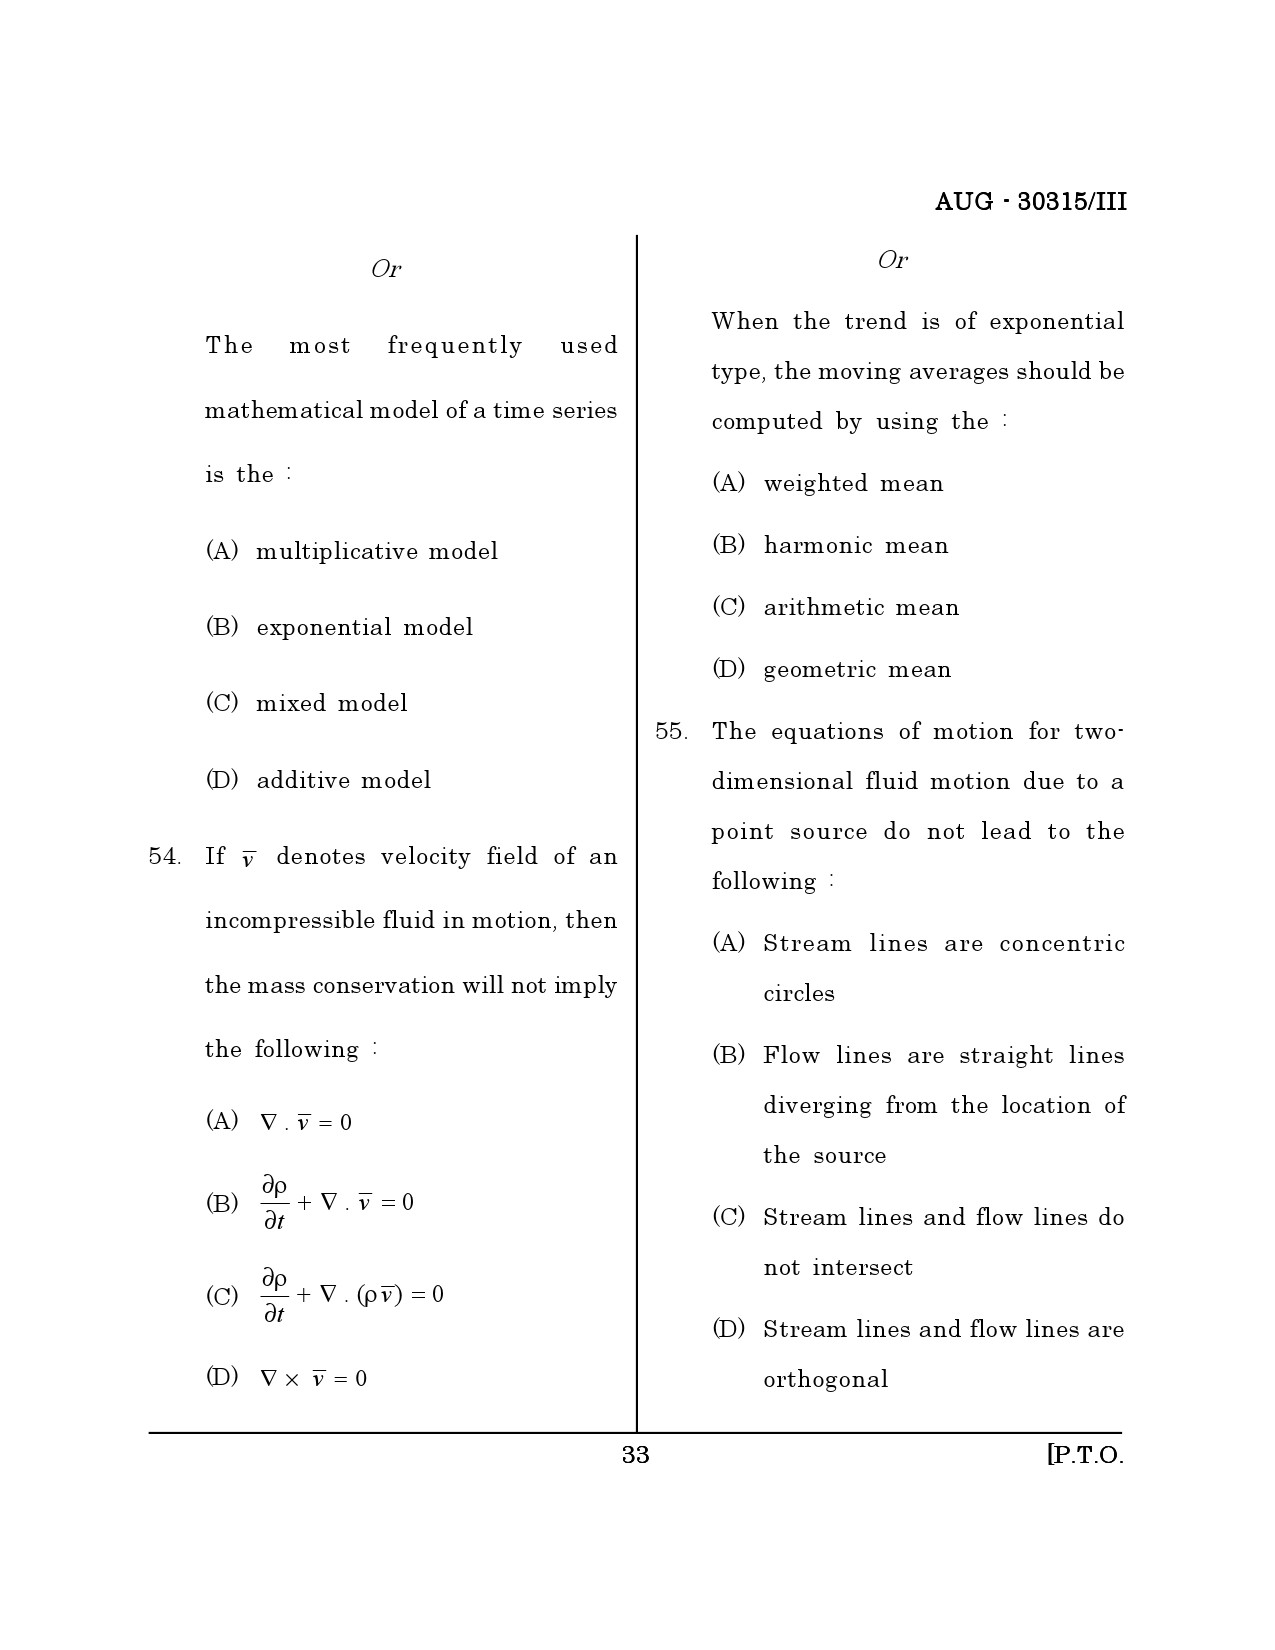 Maharashtra SET Mathematical Sciences Question Paper III August 2015 32